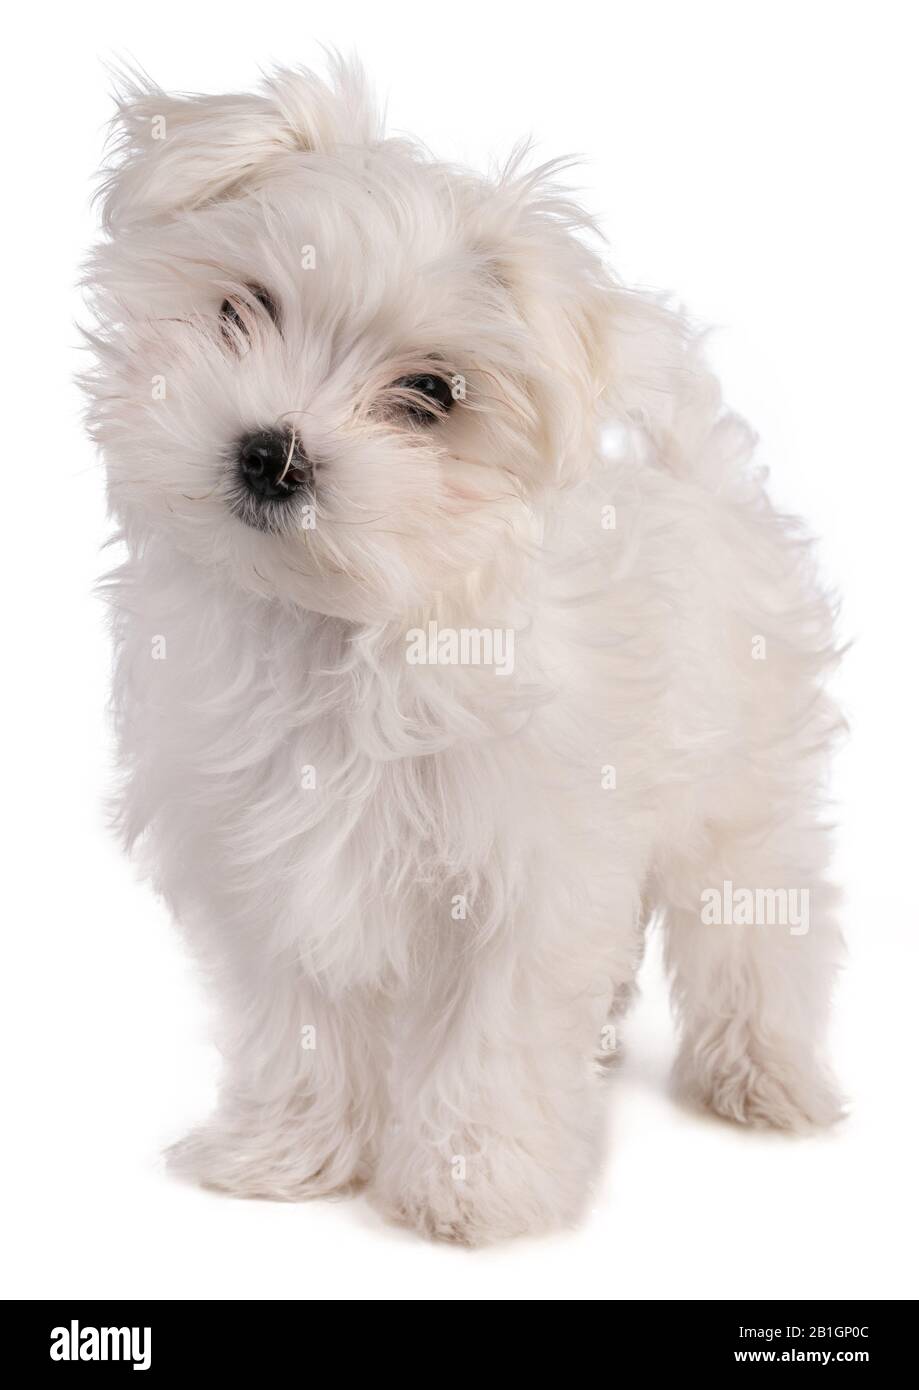 Lindo cachorro maltés Imágenes recortadas de stock - Alamy